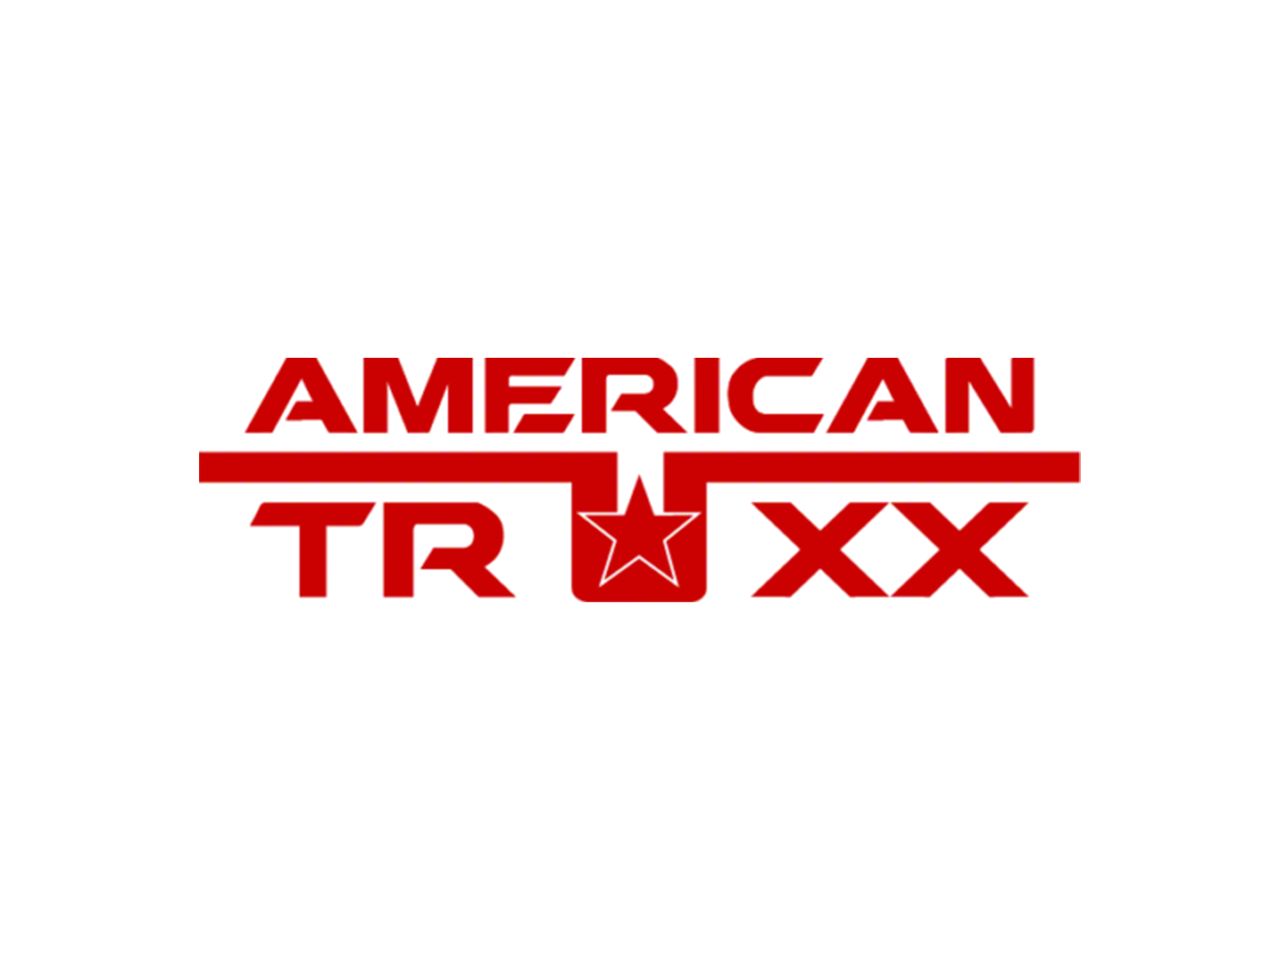 American Truxx Parts